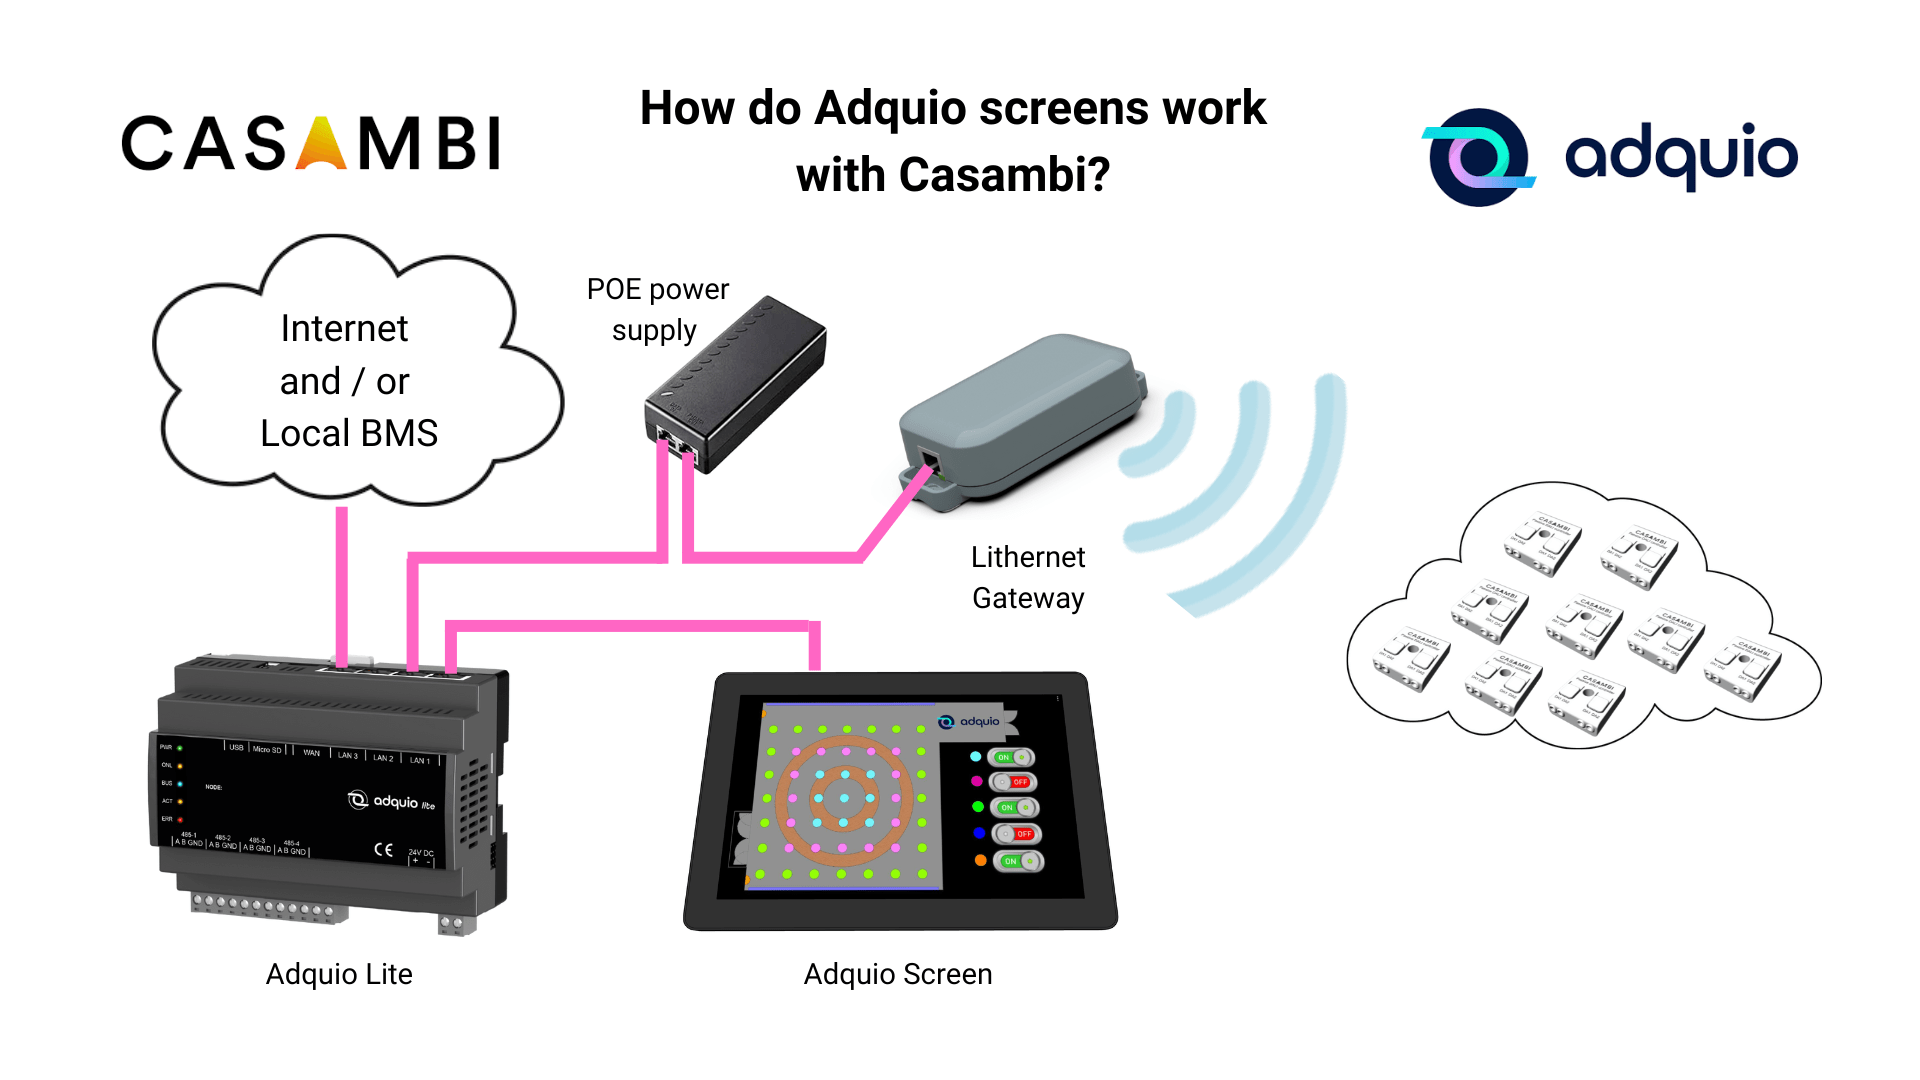 How do Adquio screens work with Casambi?